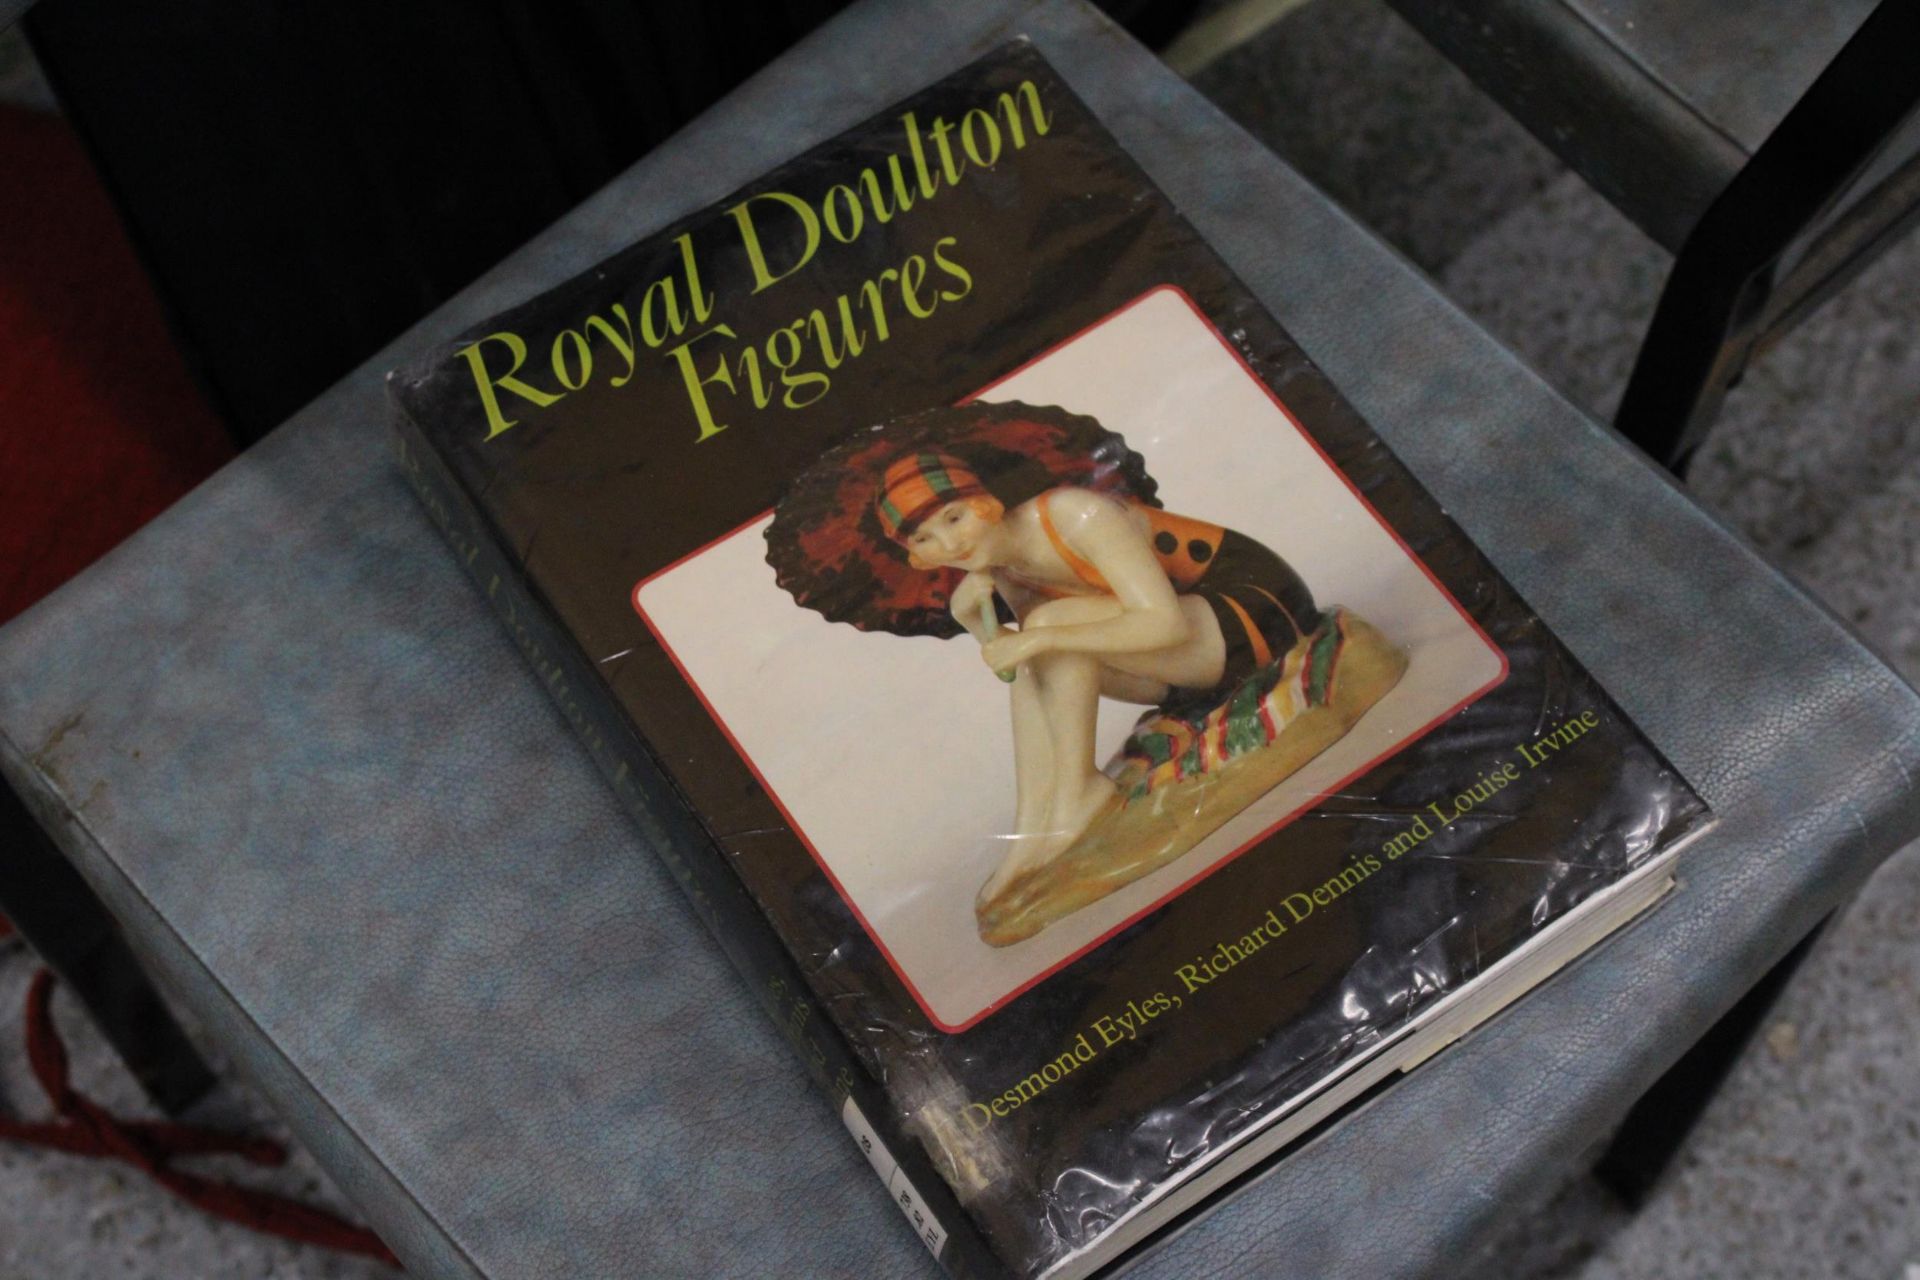 A VINTAGE ROYAL DOULTON FIGURES BOOK